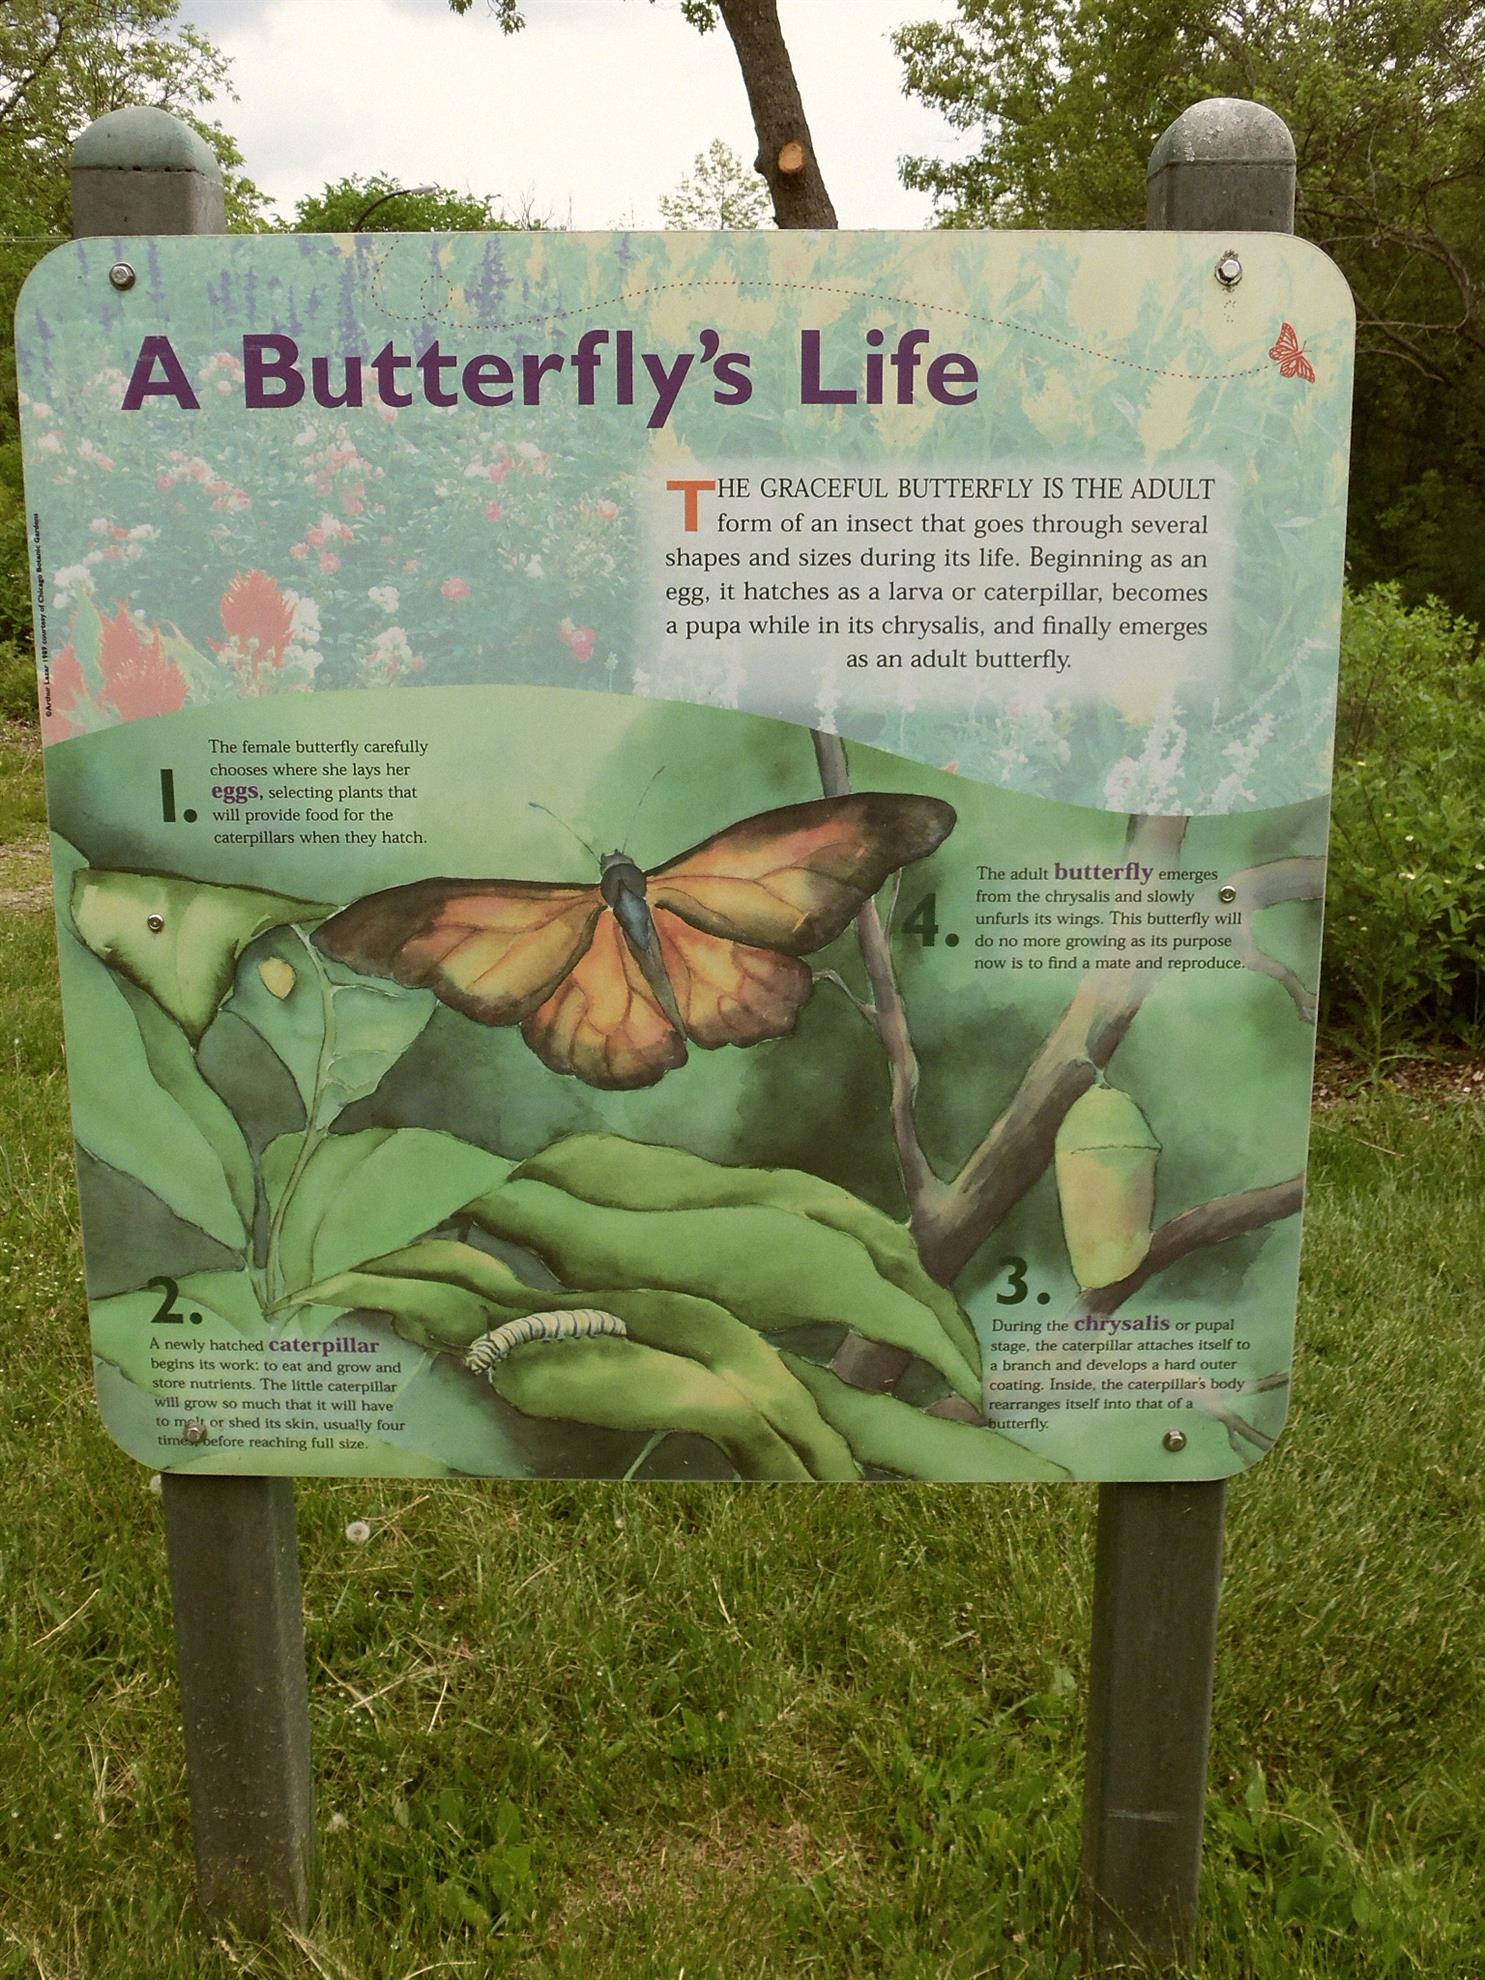 Butterfly Garden at Gallup Park